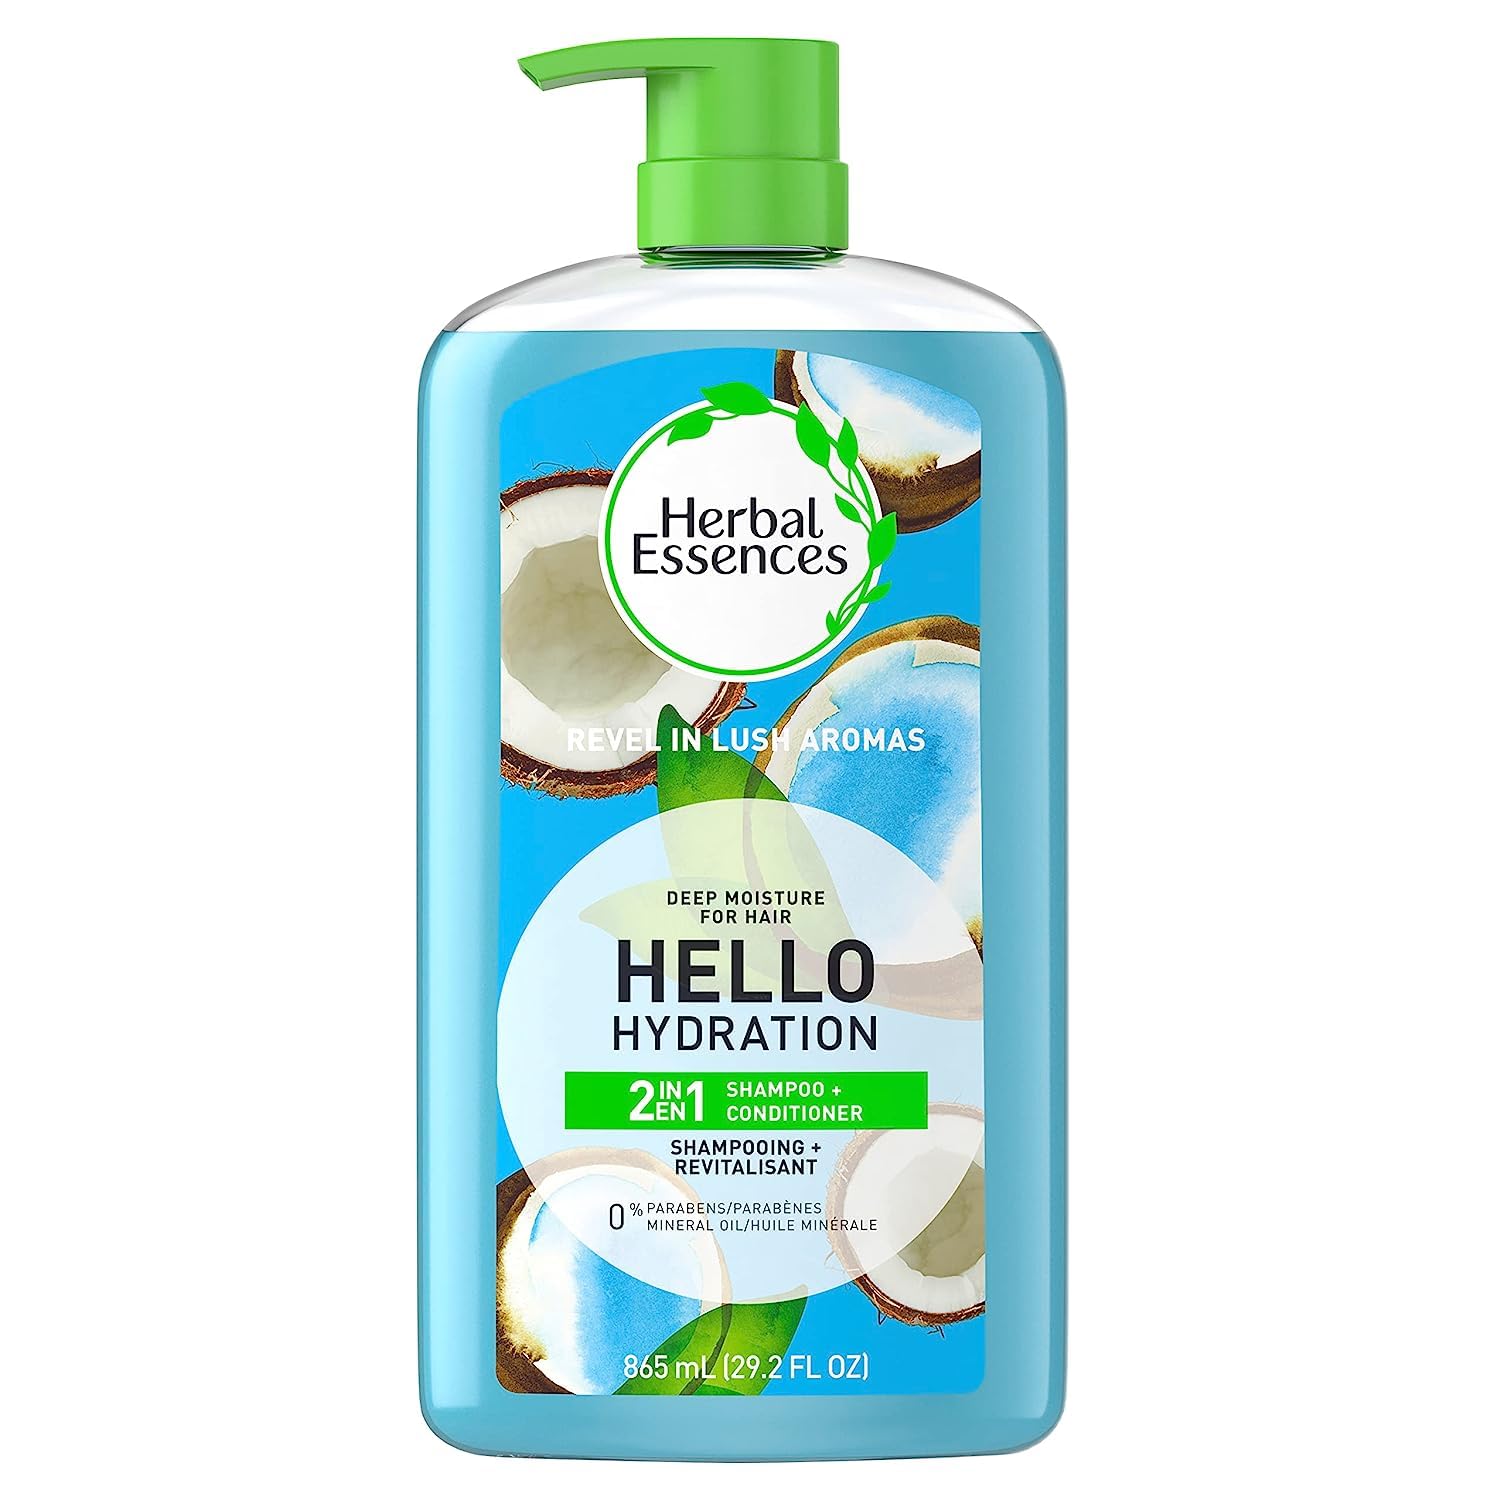 Herbal Essences Hello hydration 2in1 shampoo [...]